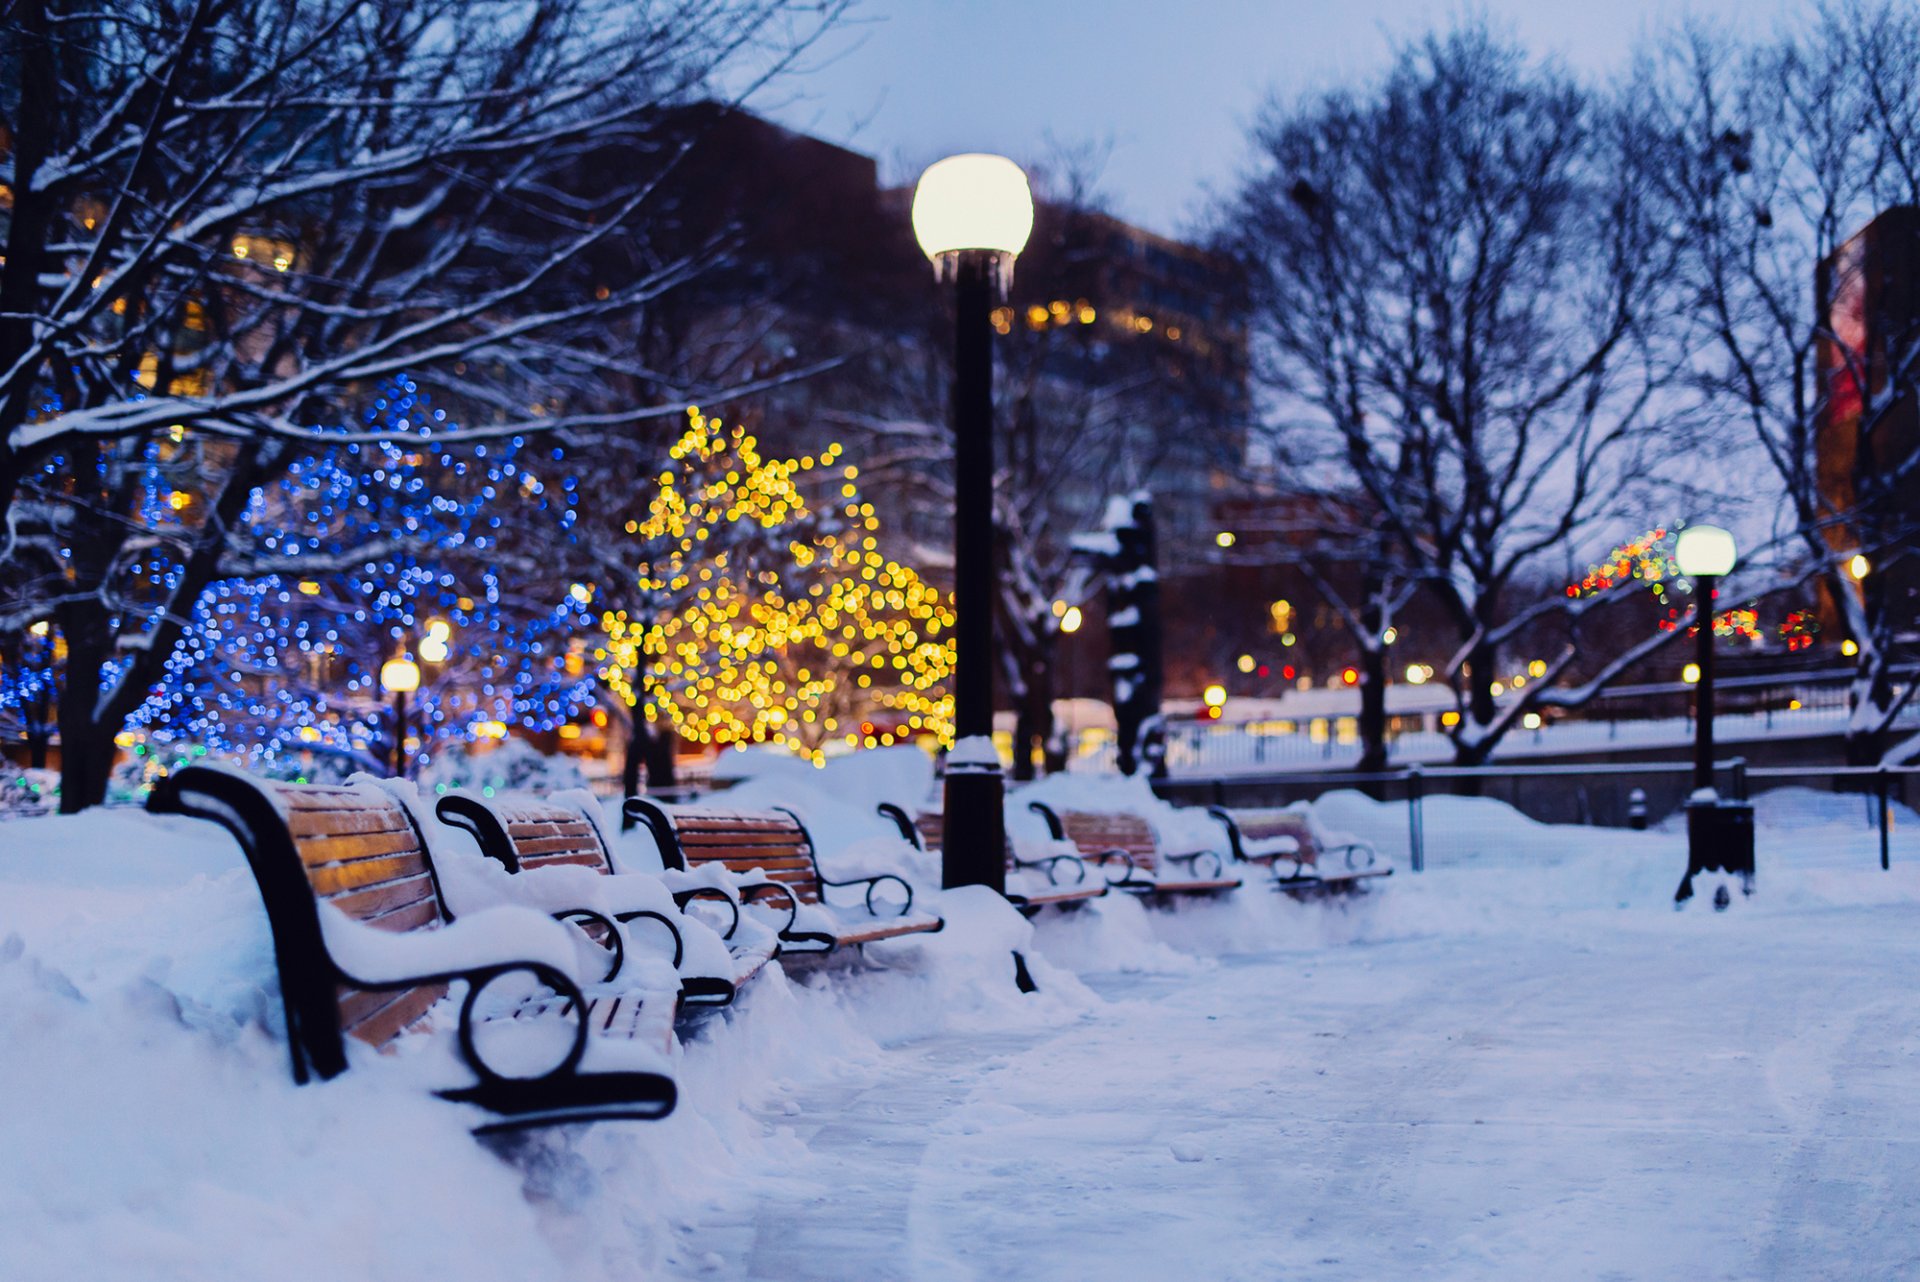 città sera inverno neve panchine panchine panchine lanterne luci luci ghirlande bokeh alberi vacanze